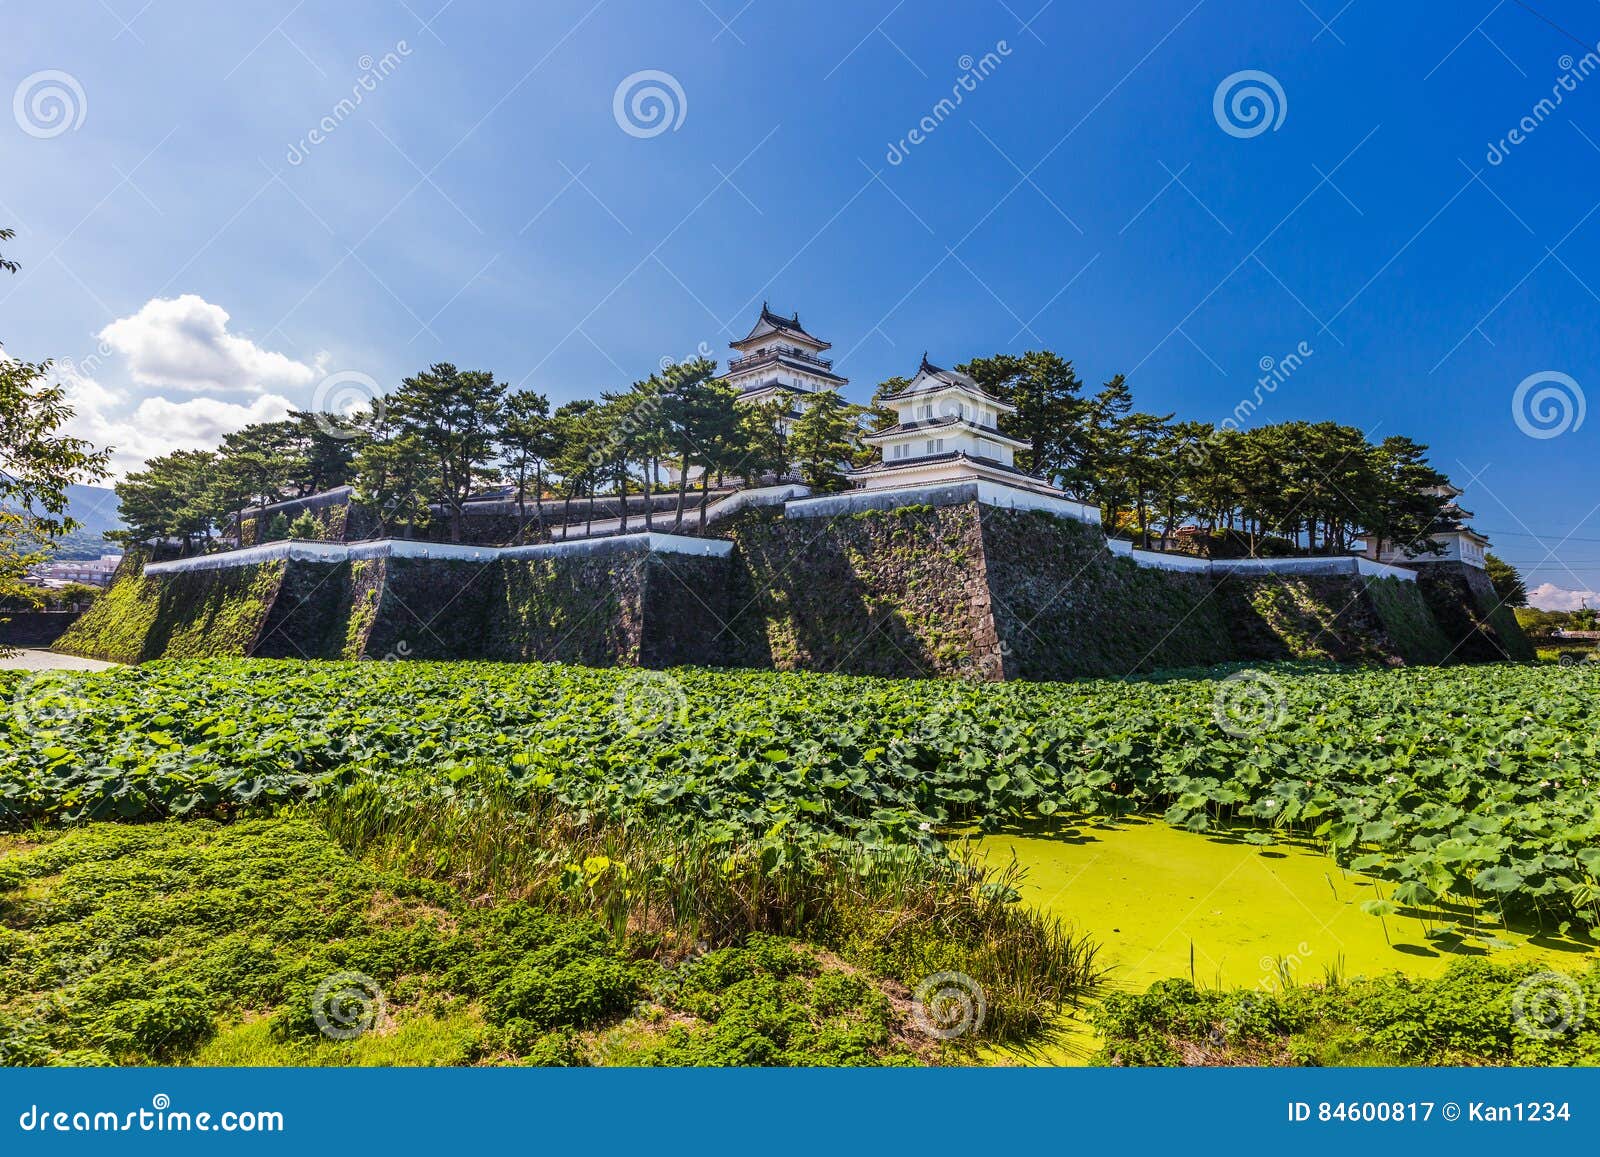 shimabara castle , famous attraction in nagasaki, kyushu